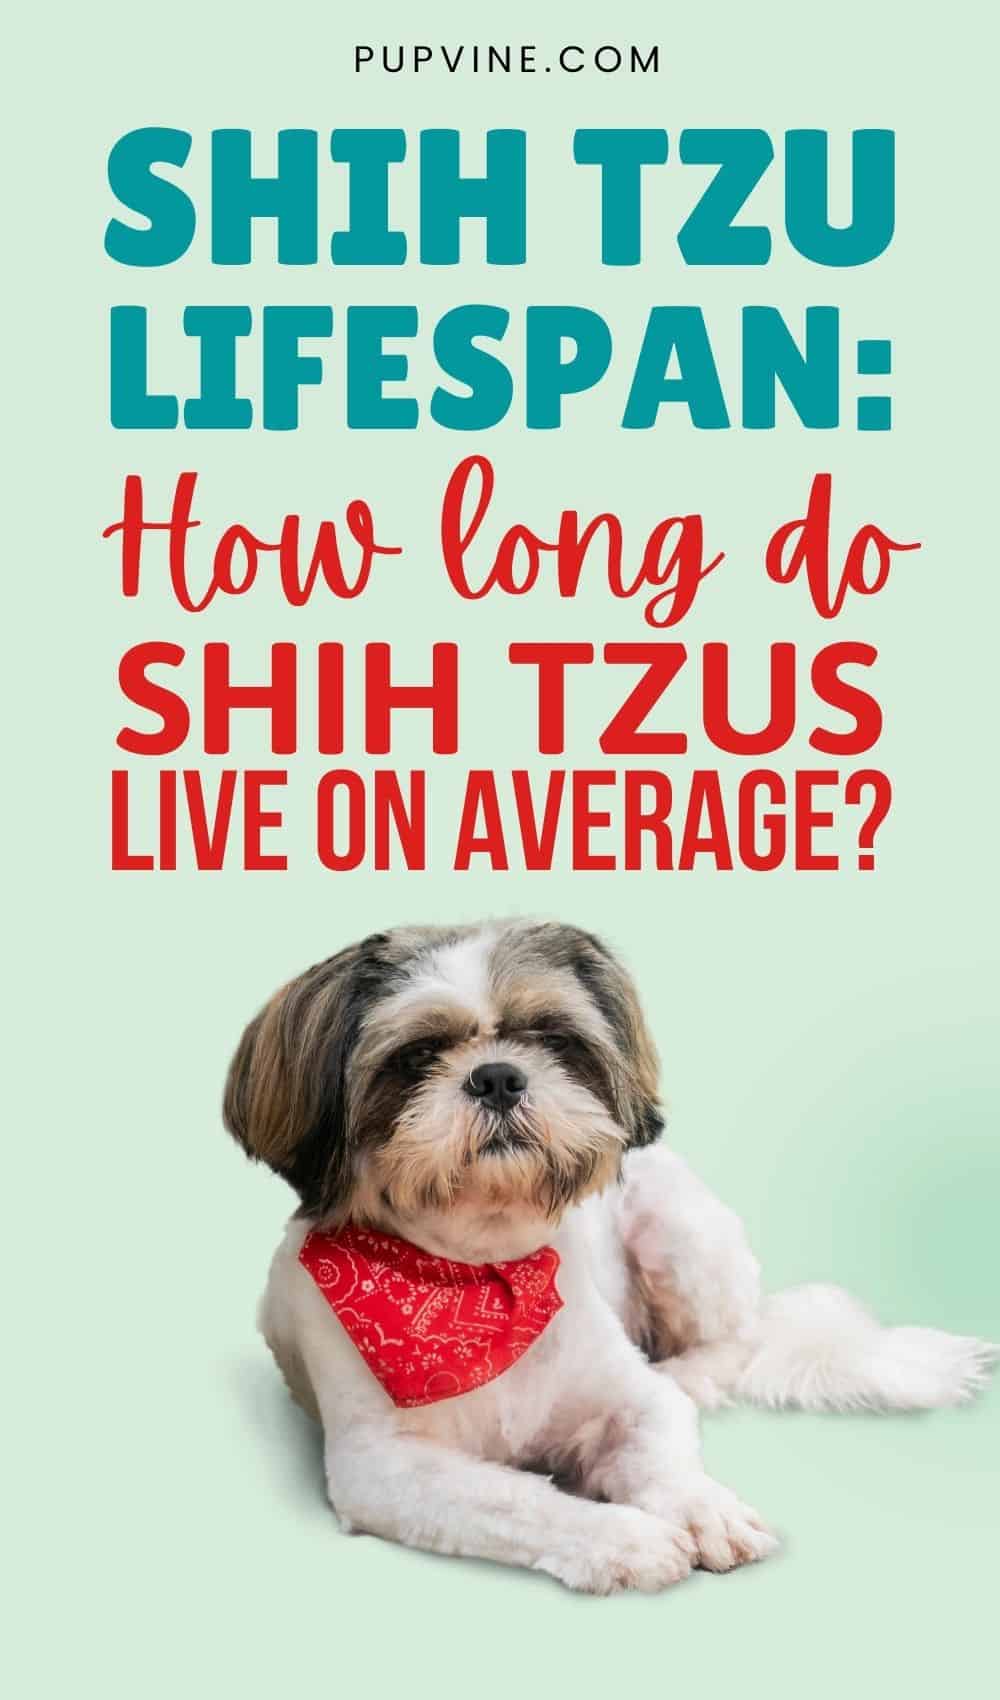 Shih Tzu Lifespan: How Long Do Shih Tzus Live On Average?